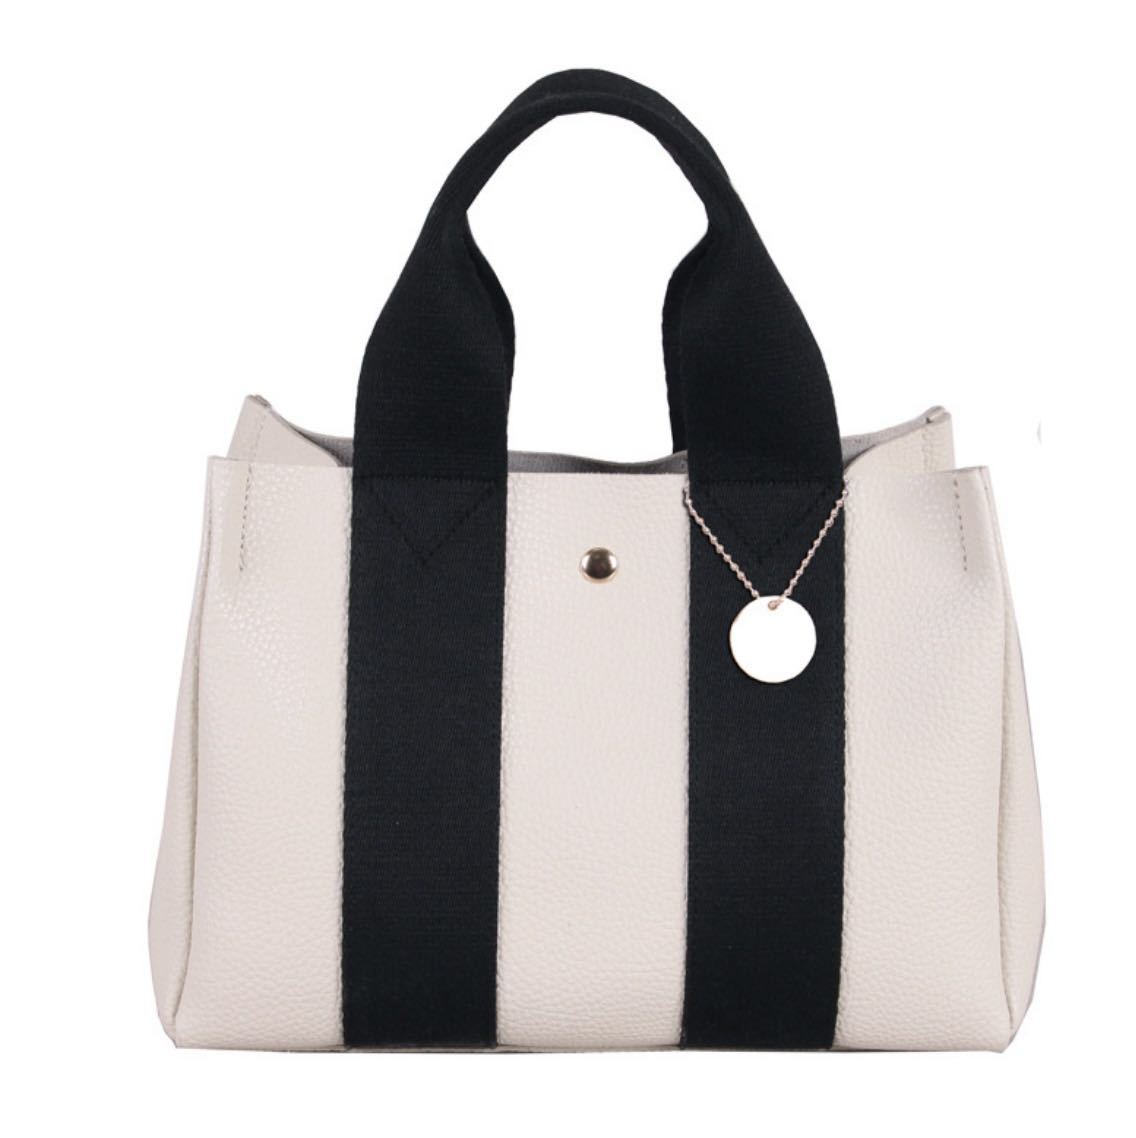  Mini tote bag 2way tote bag lady's shoulder bag inner bag attaching commuting bag IC card storage white color 